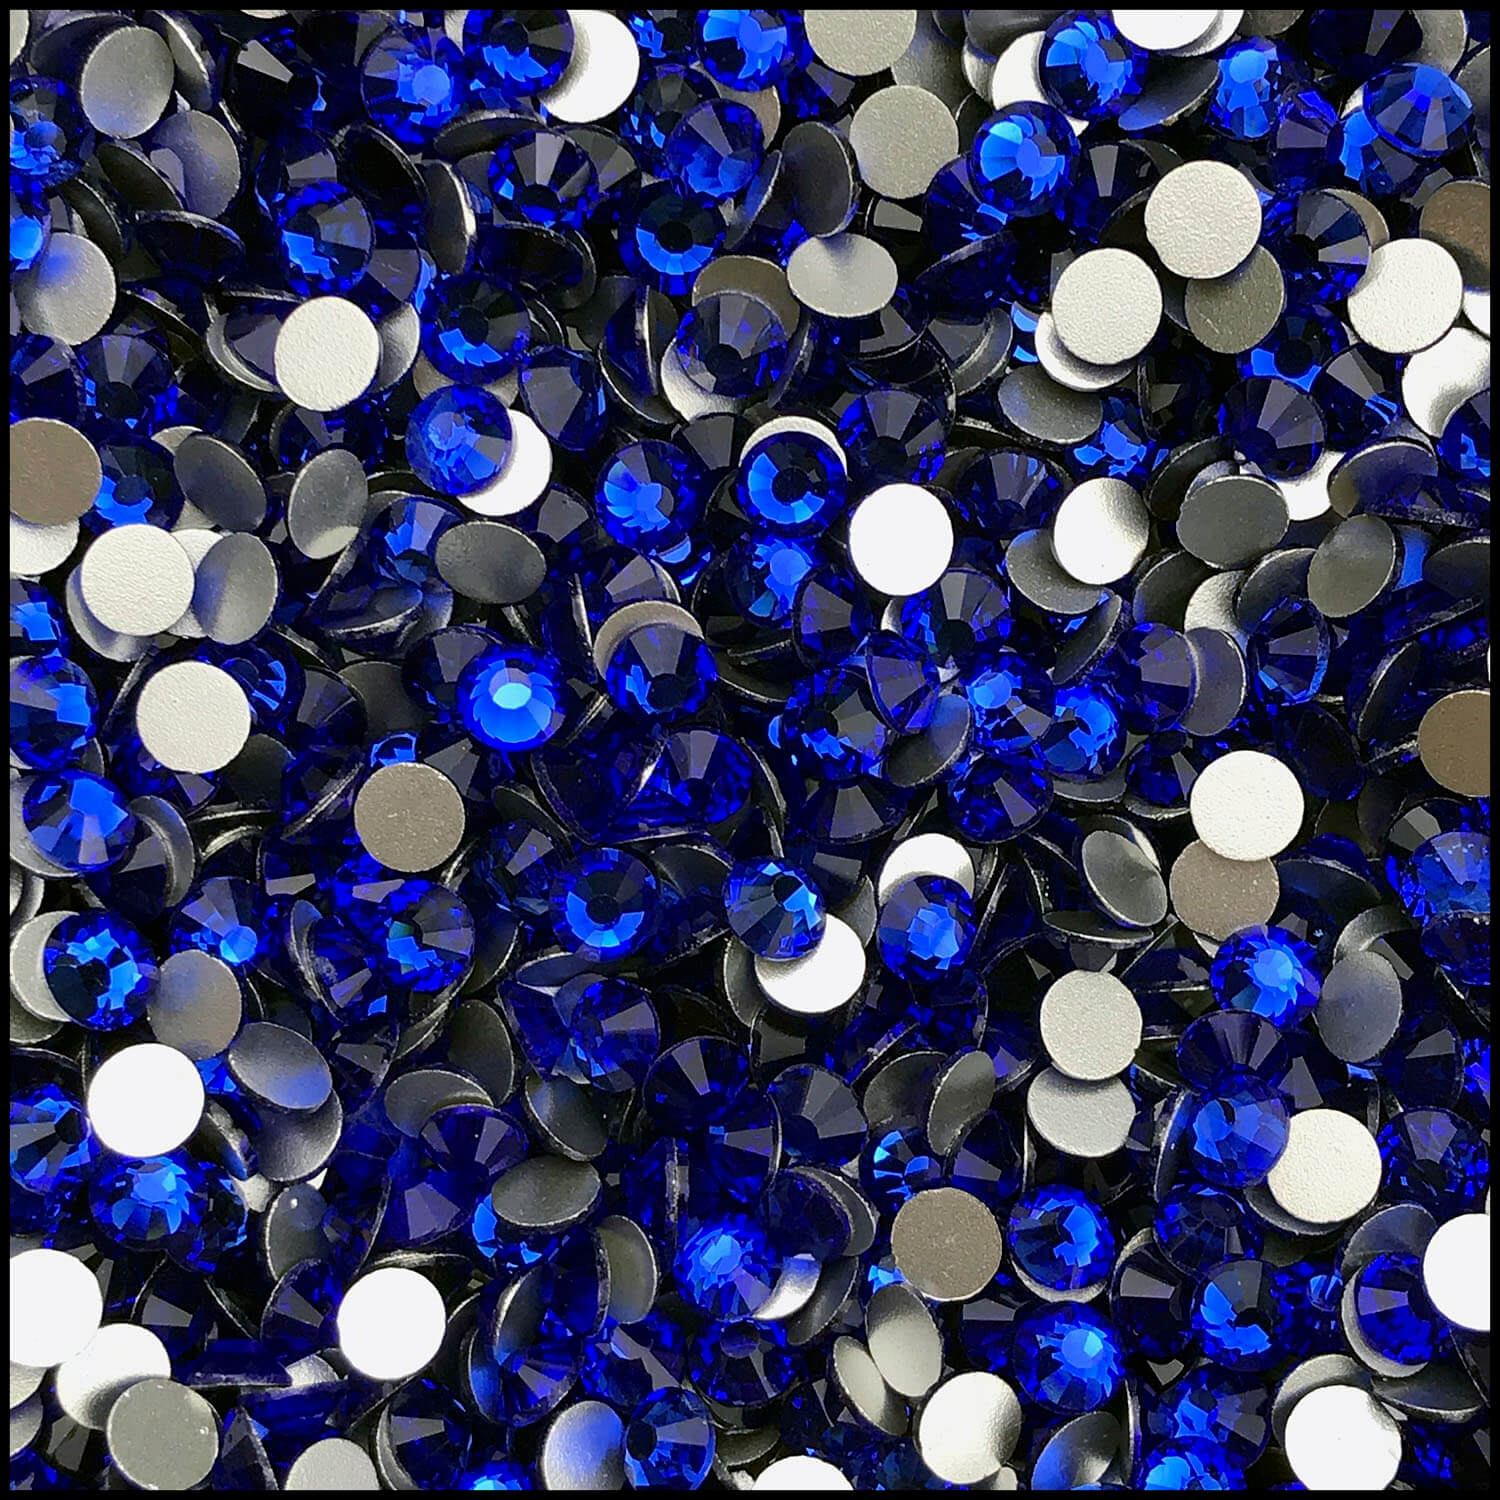 SS20 Royal Blue Hotfix Rhinestones Crystal Glass Gemstone Bulk for Fabric Clothes Shirts Shoes Bling Decoration Gifts Flat Back Round(48mm 1440PCS)